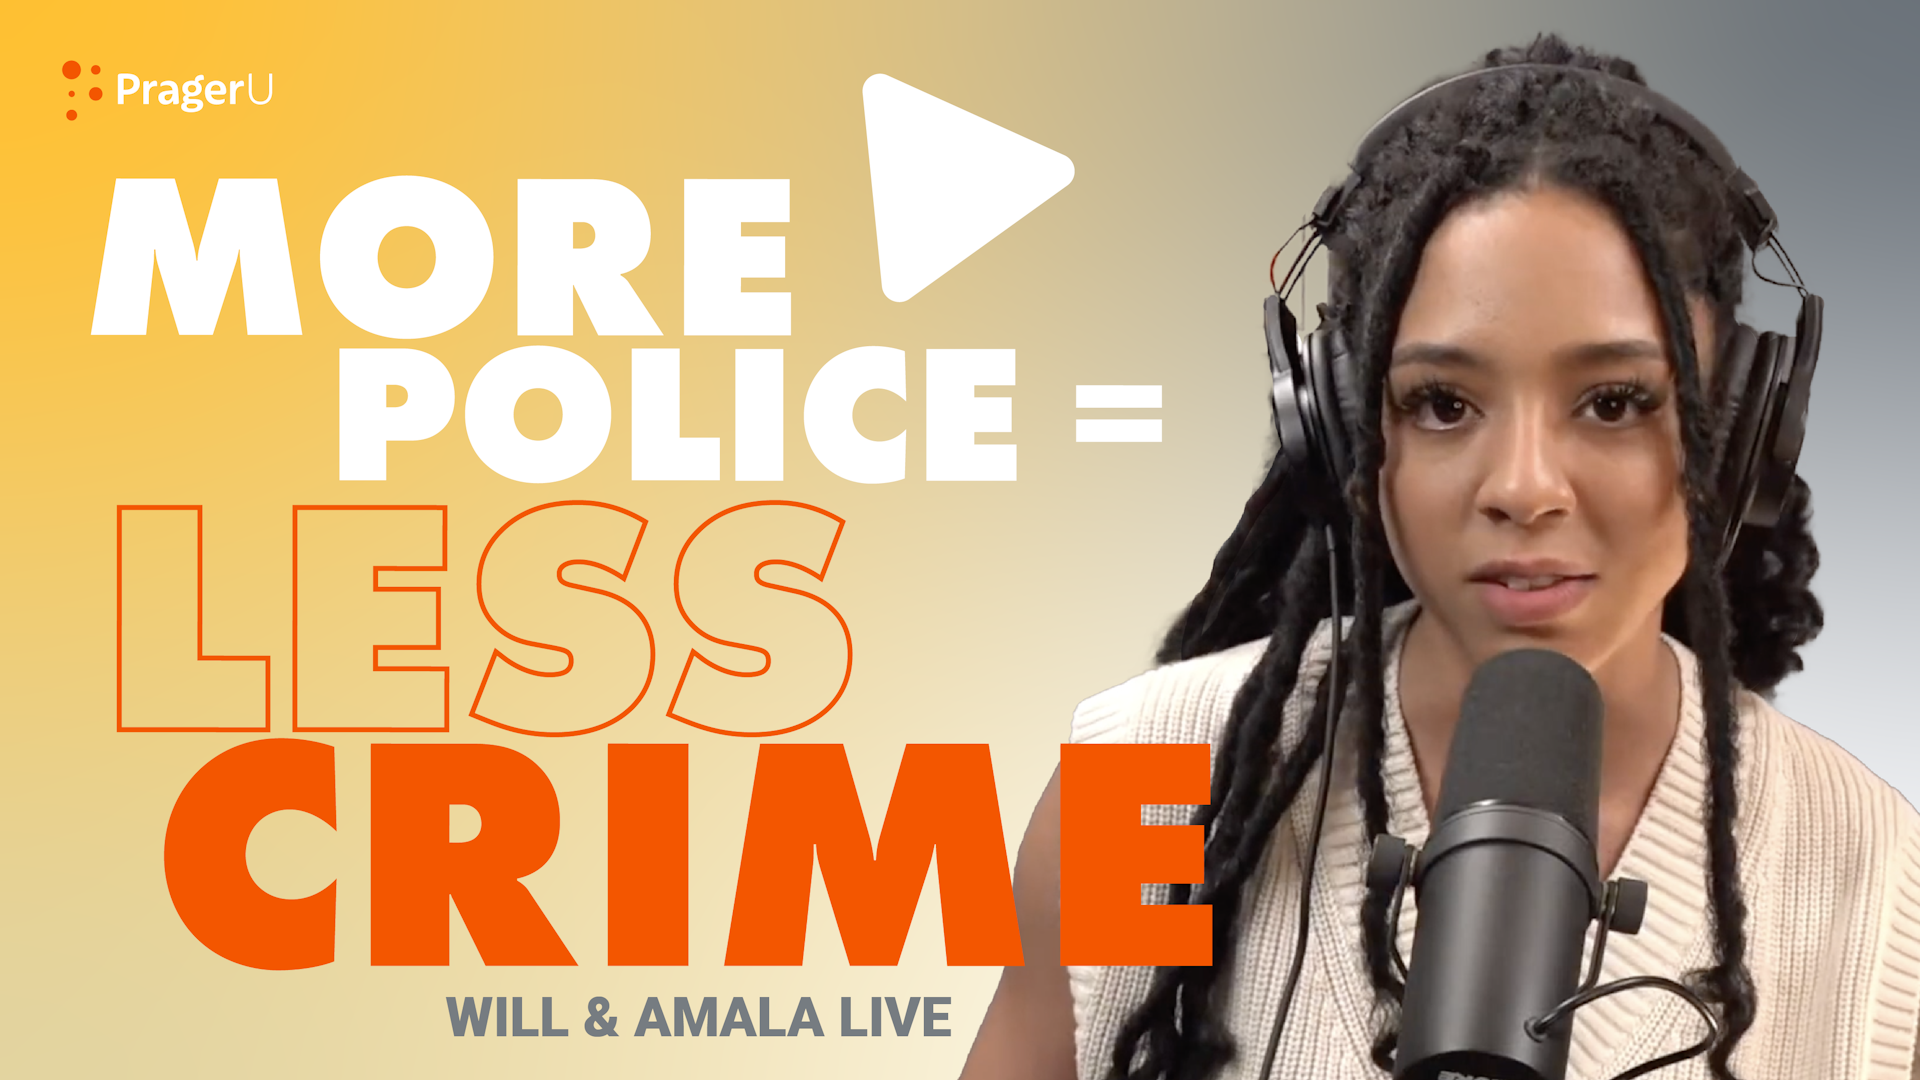 More Police = Less Crime